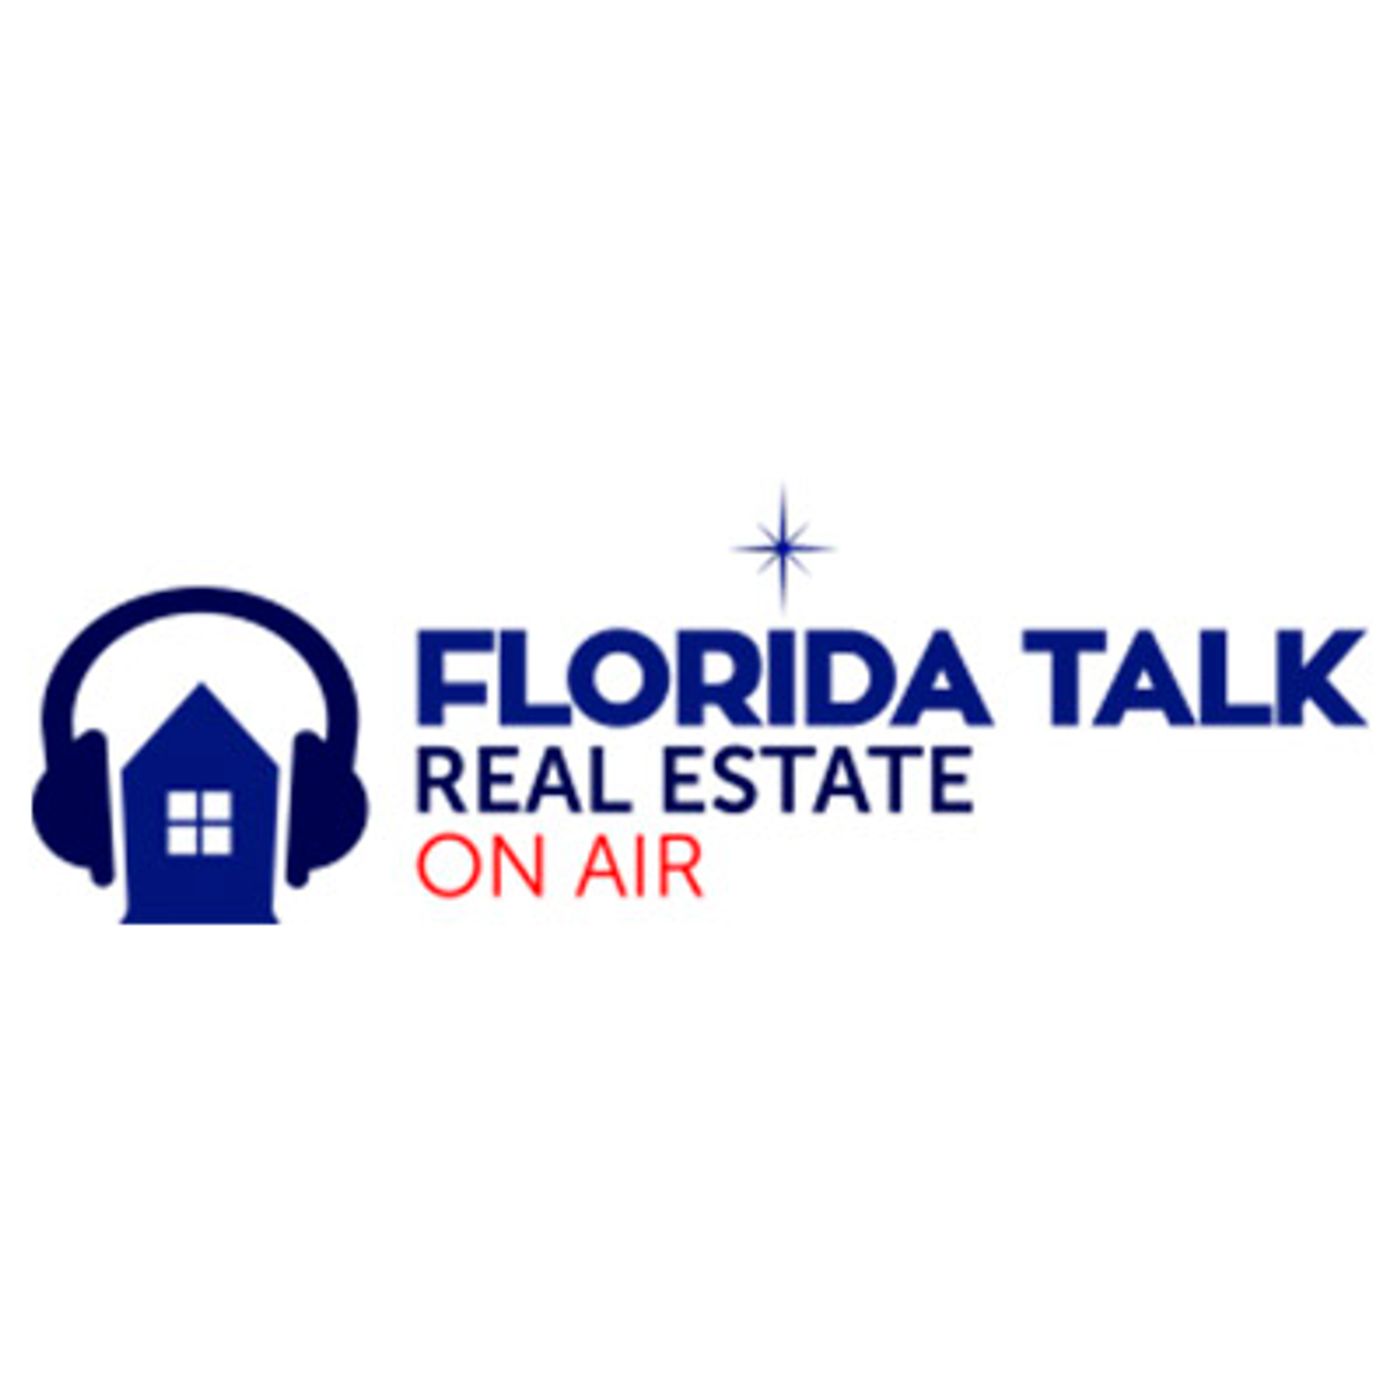 Florida Talk Real Estate